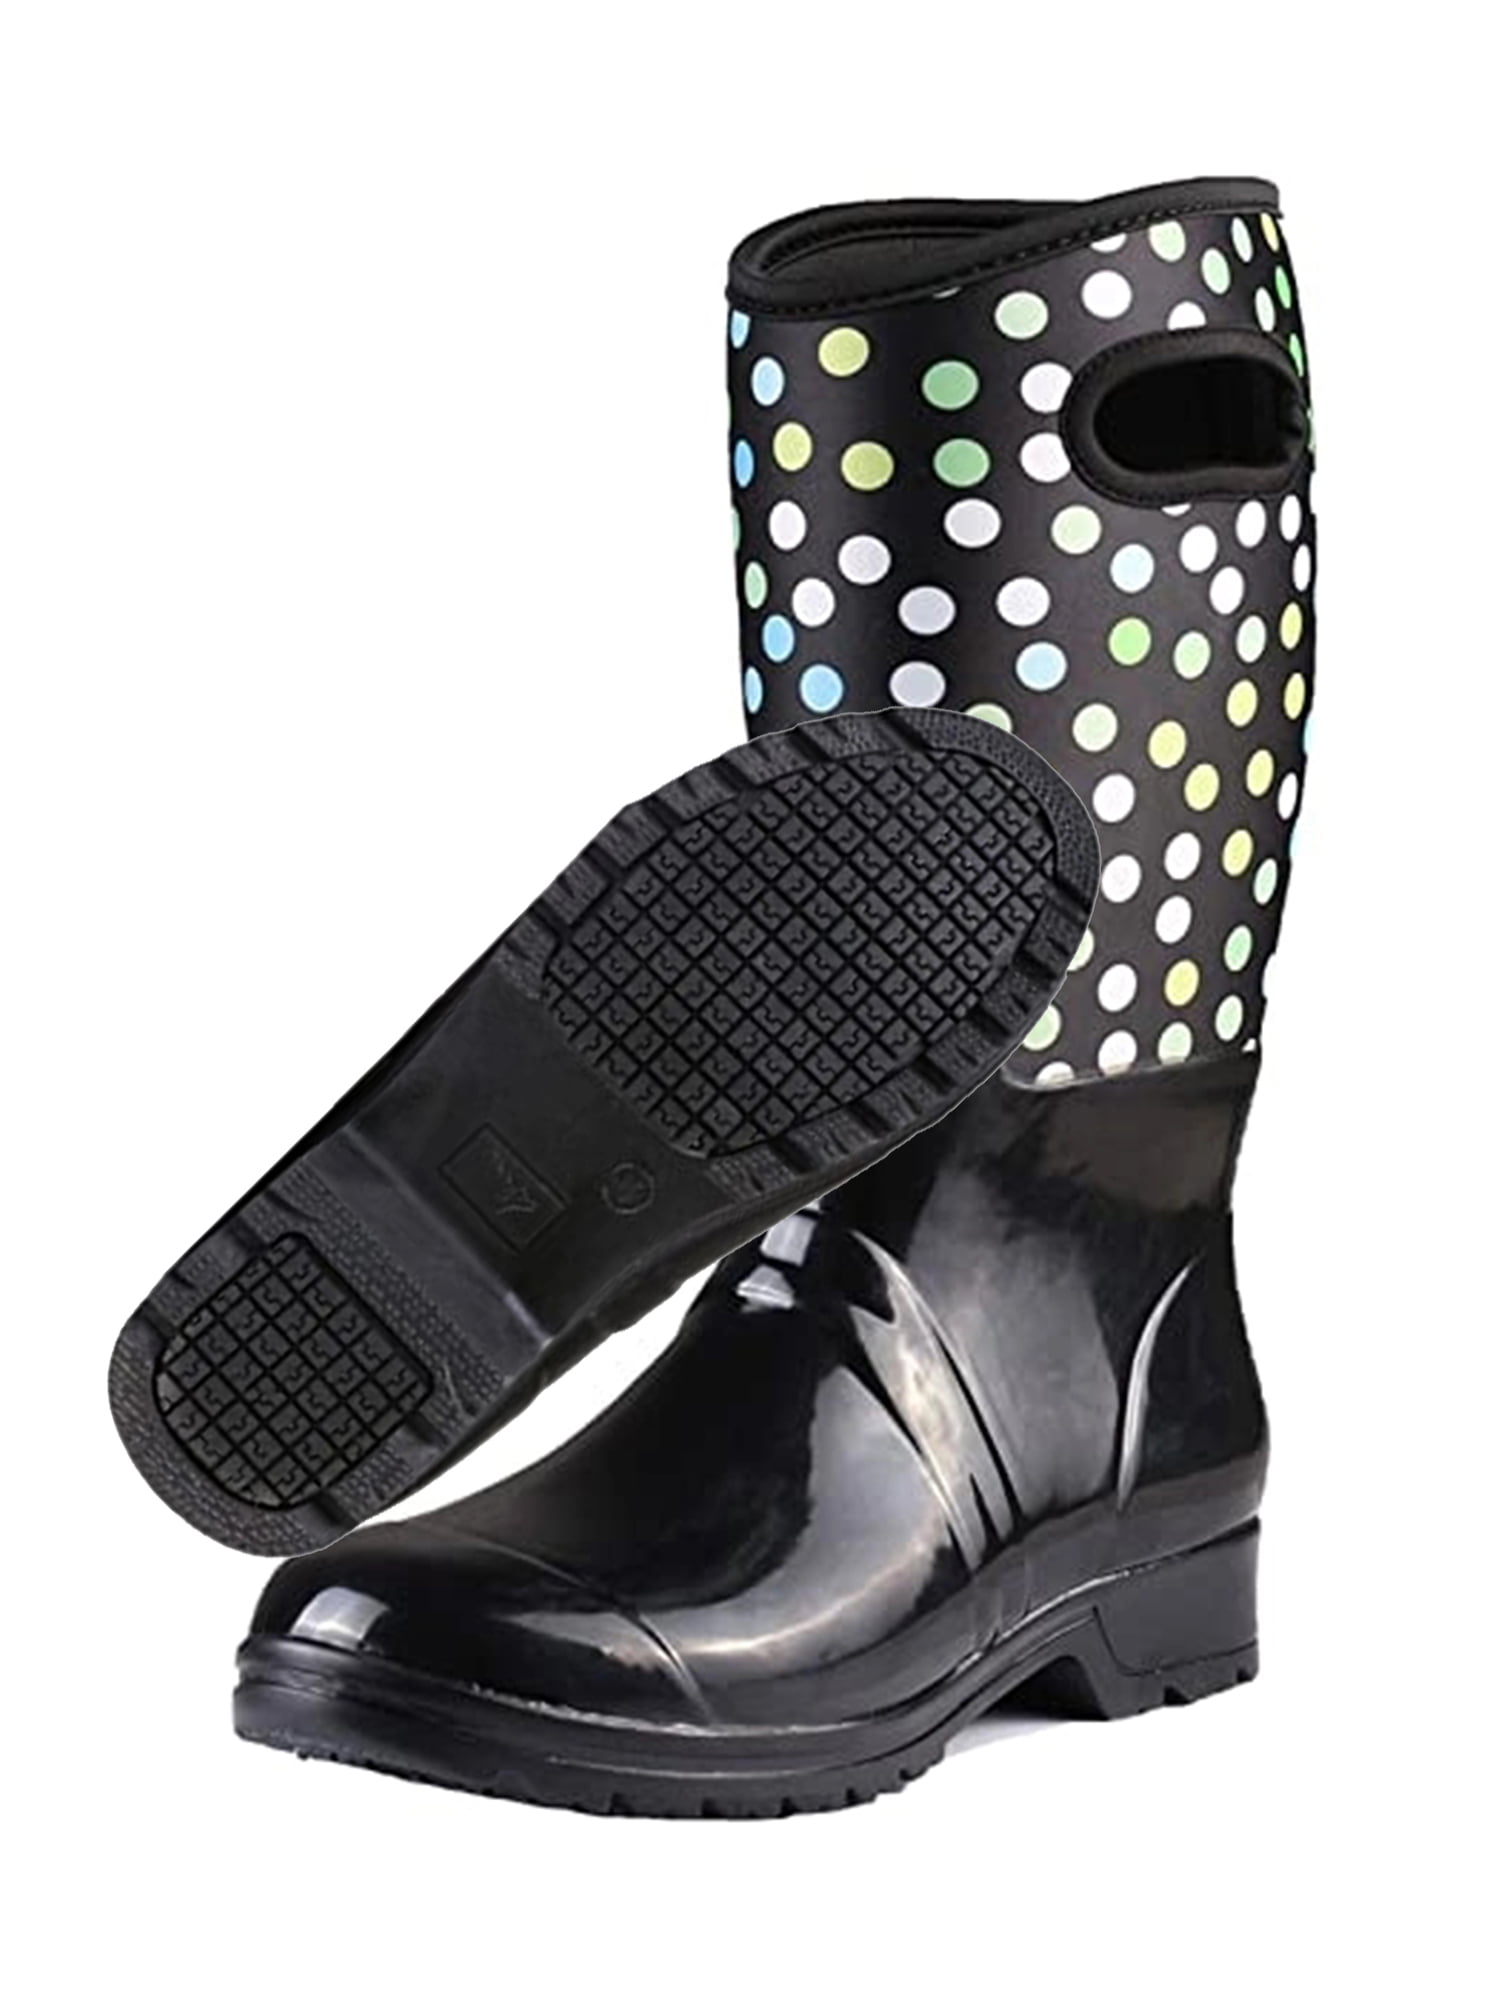 Neoprene Rubber Waterproof Rain Boots for Women Mid-Calf Slip Resistant ...